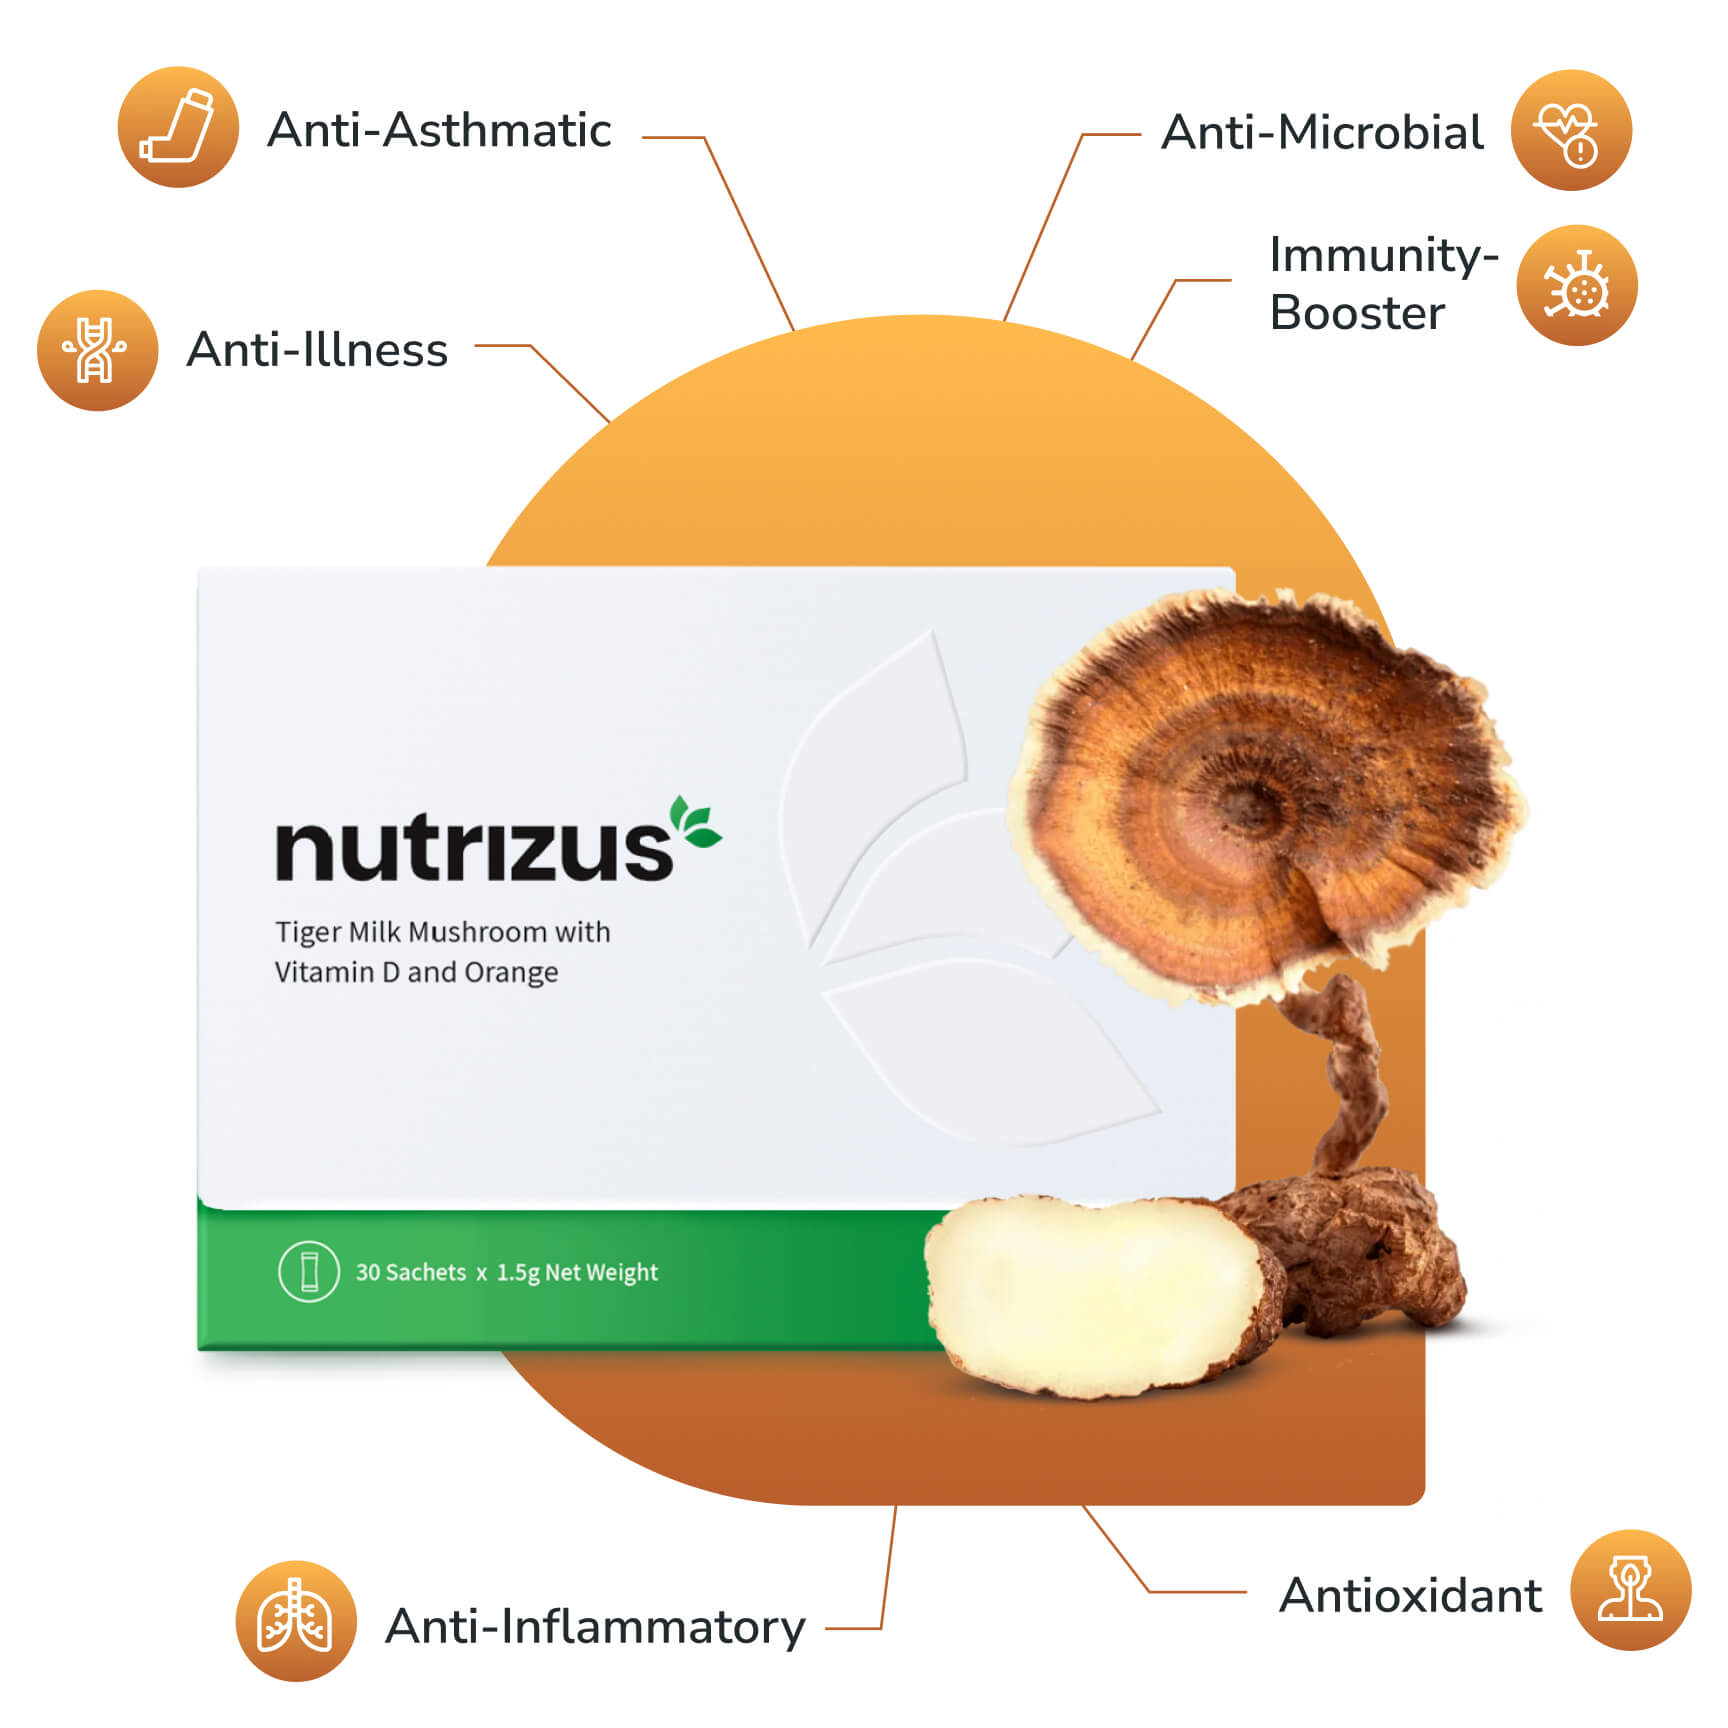 Nutrizus health benefits